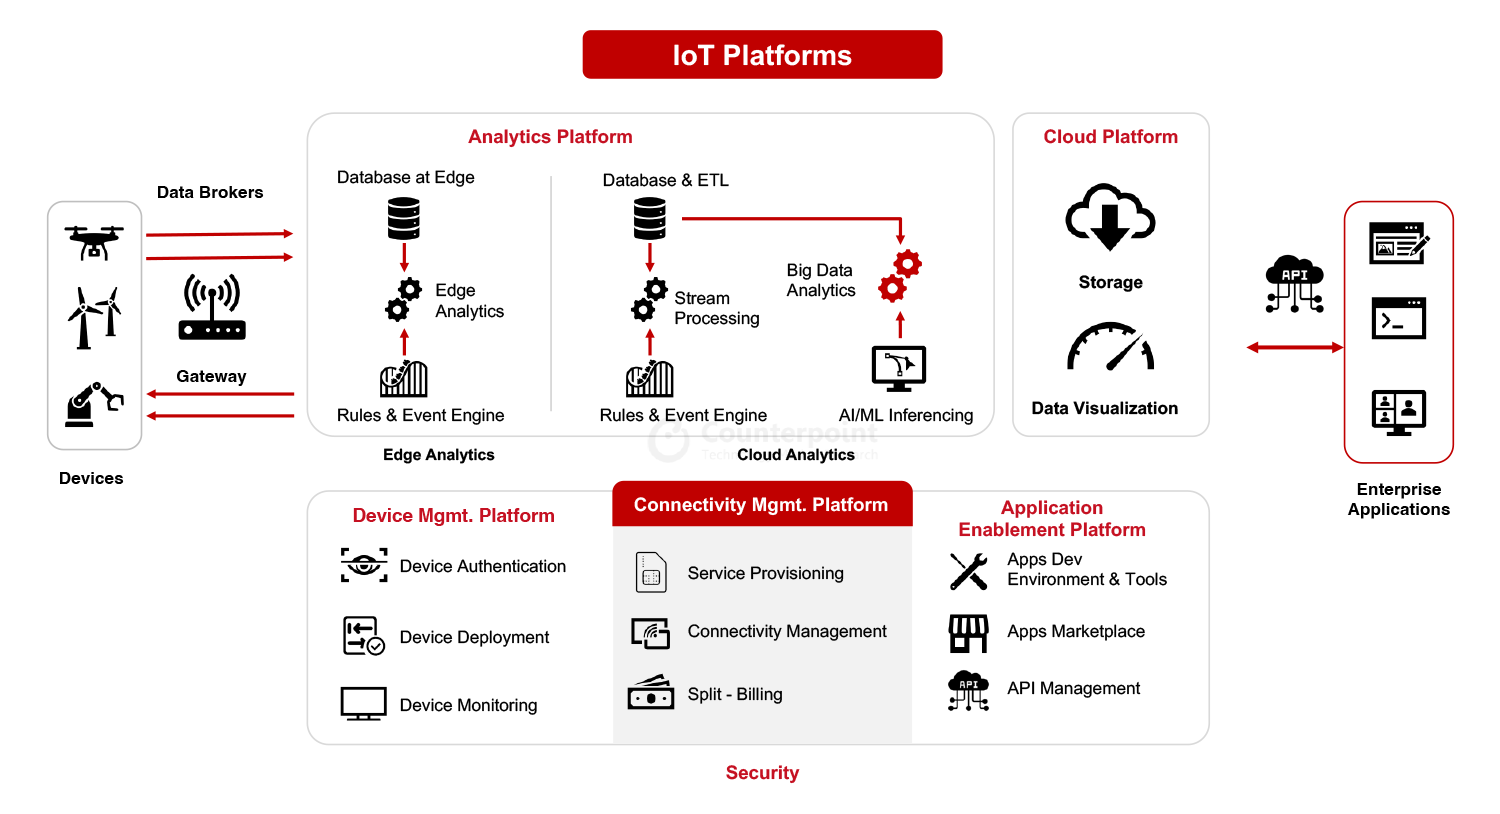 Iot platforms - Split billing